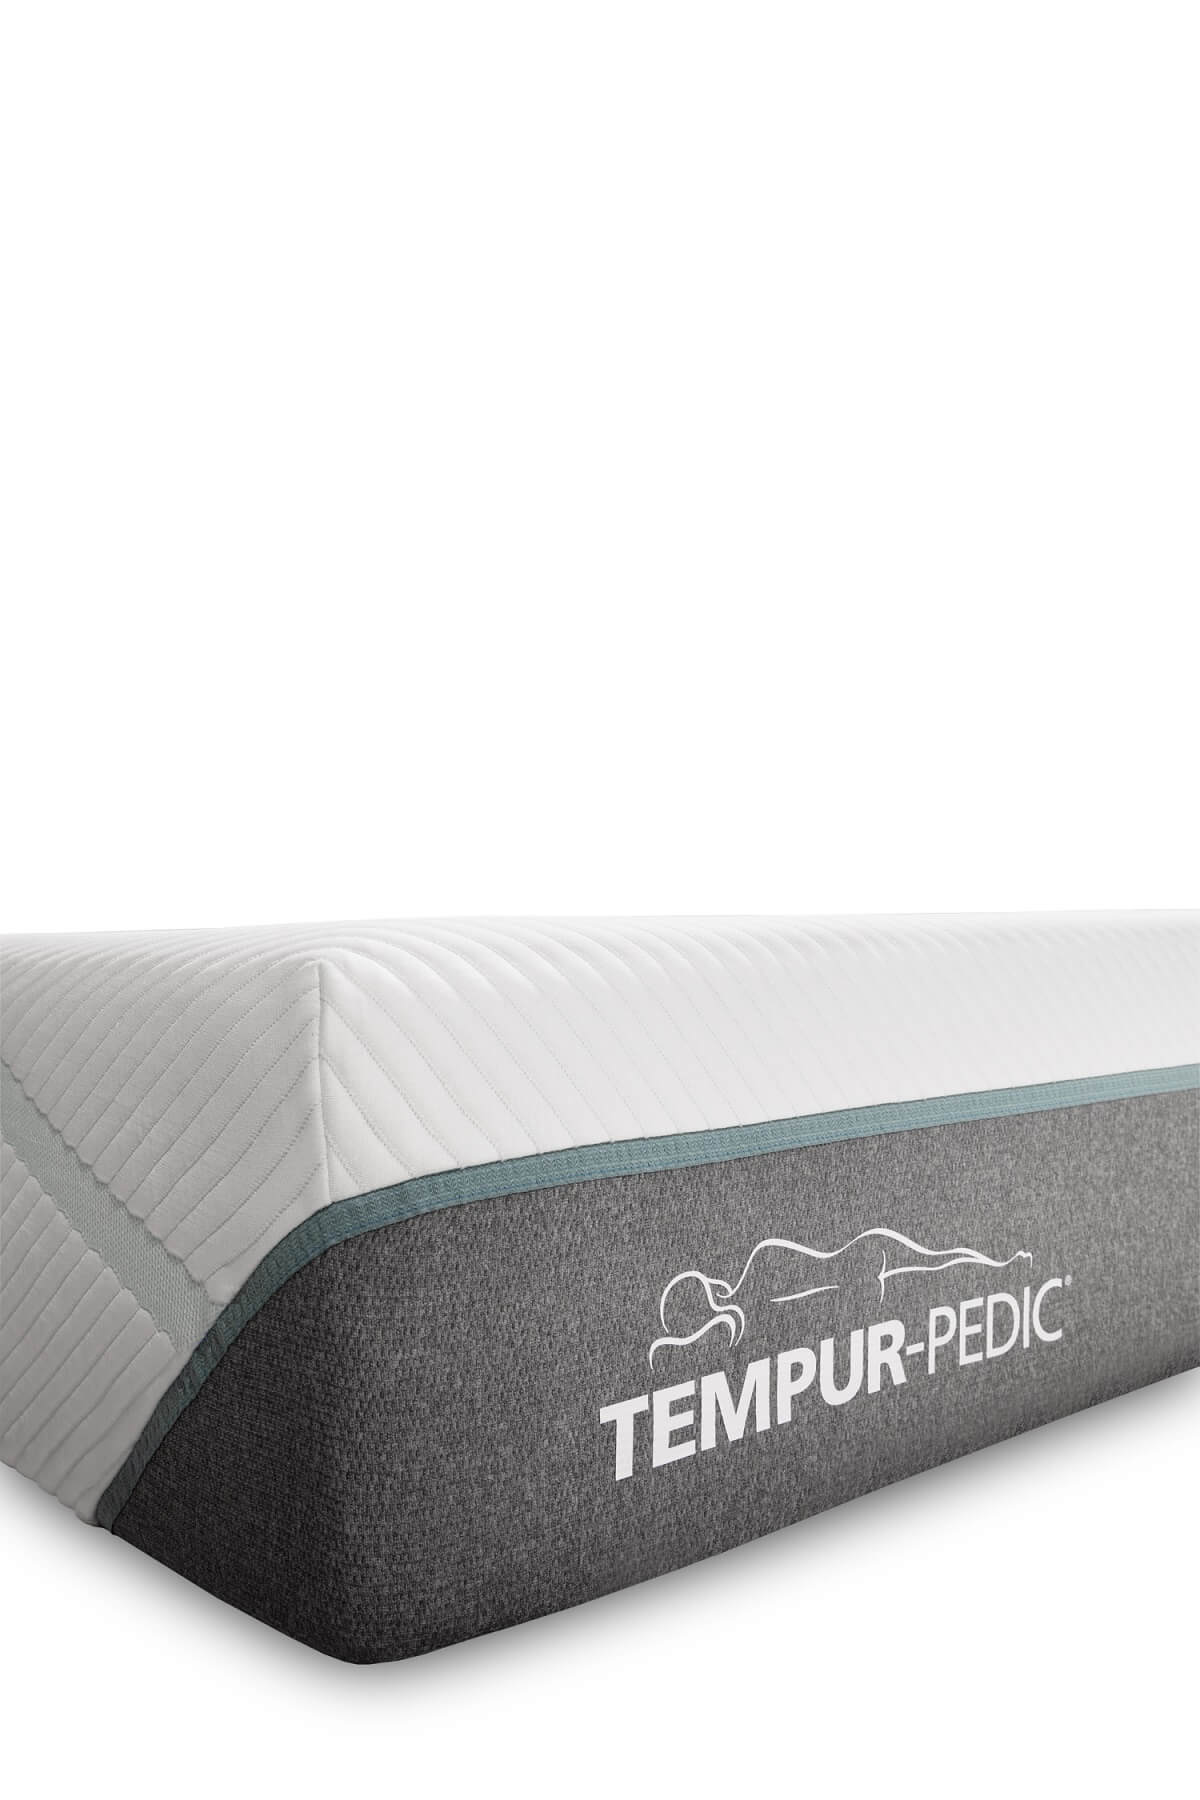 Buy Tempur-Pedic Tempur-Adapt Medium Mattress Adjustable Bed